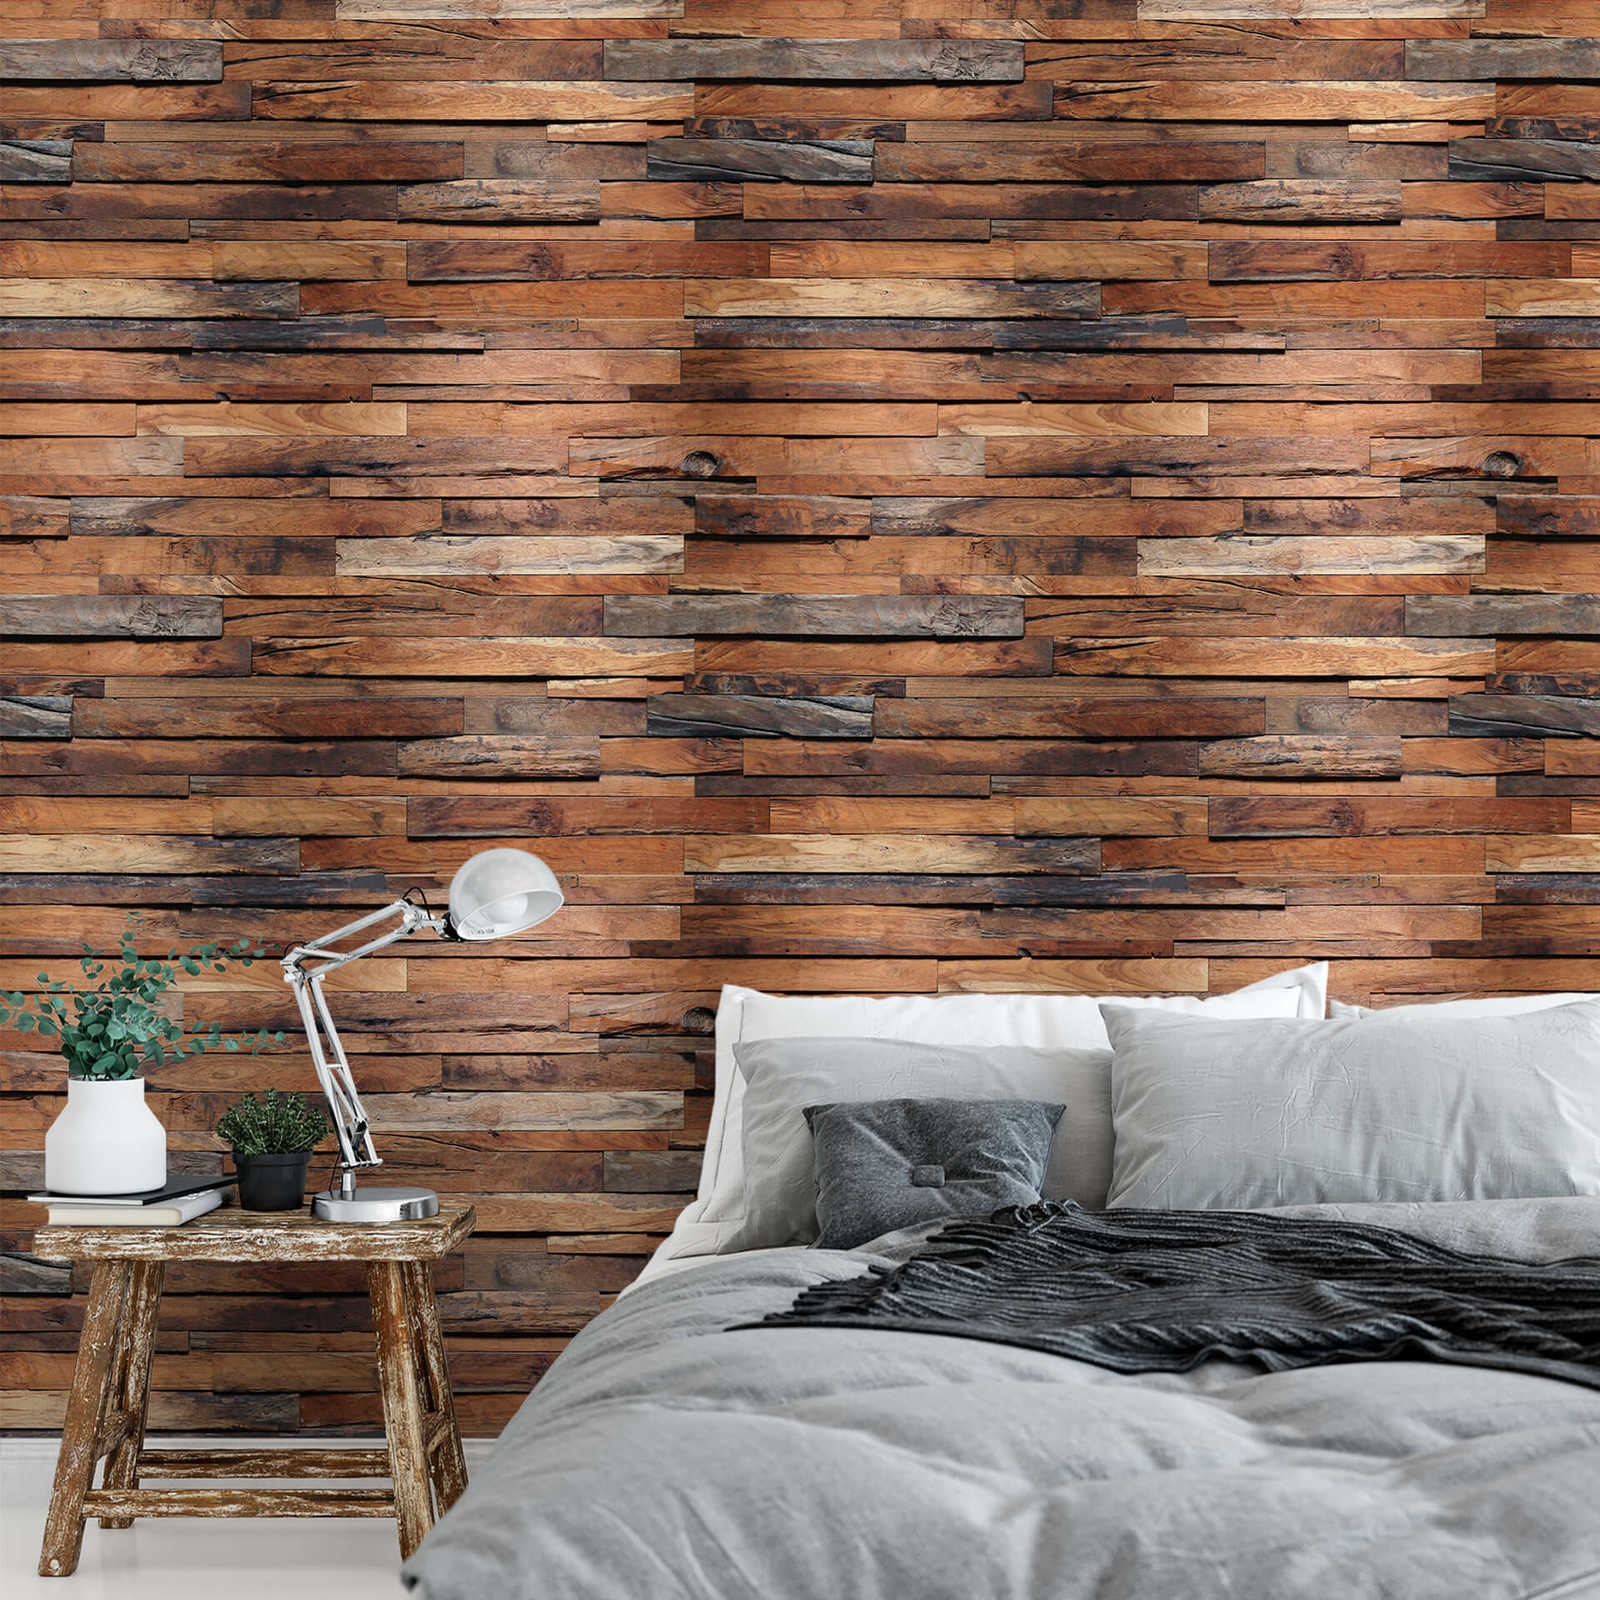             Mural de pared con aspecto de madera rústica, patrón de parquet 3D - Marrón
        